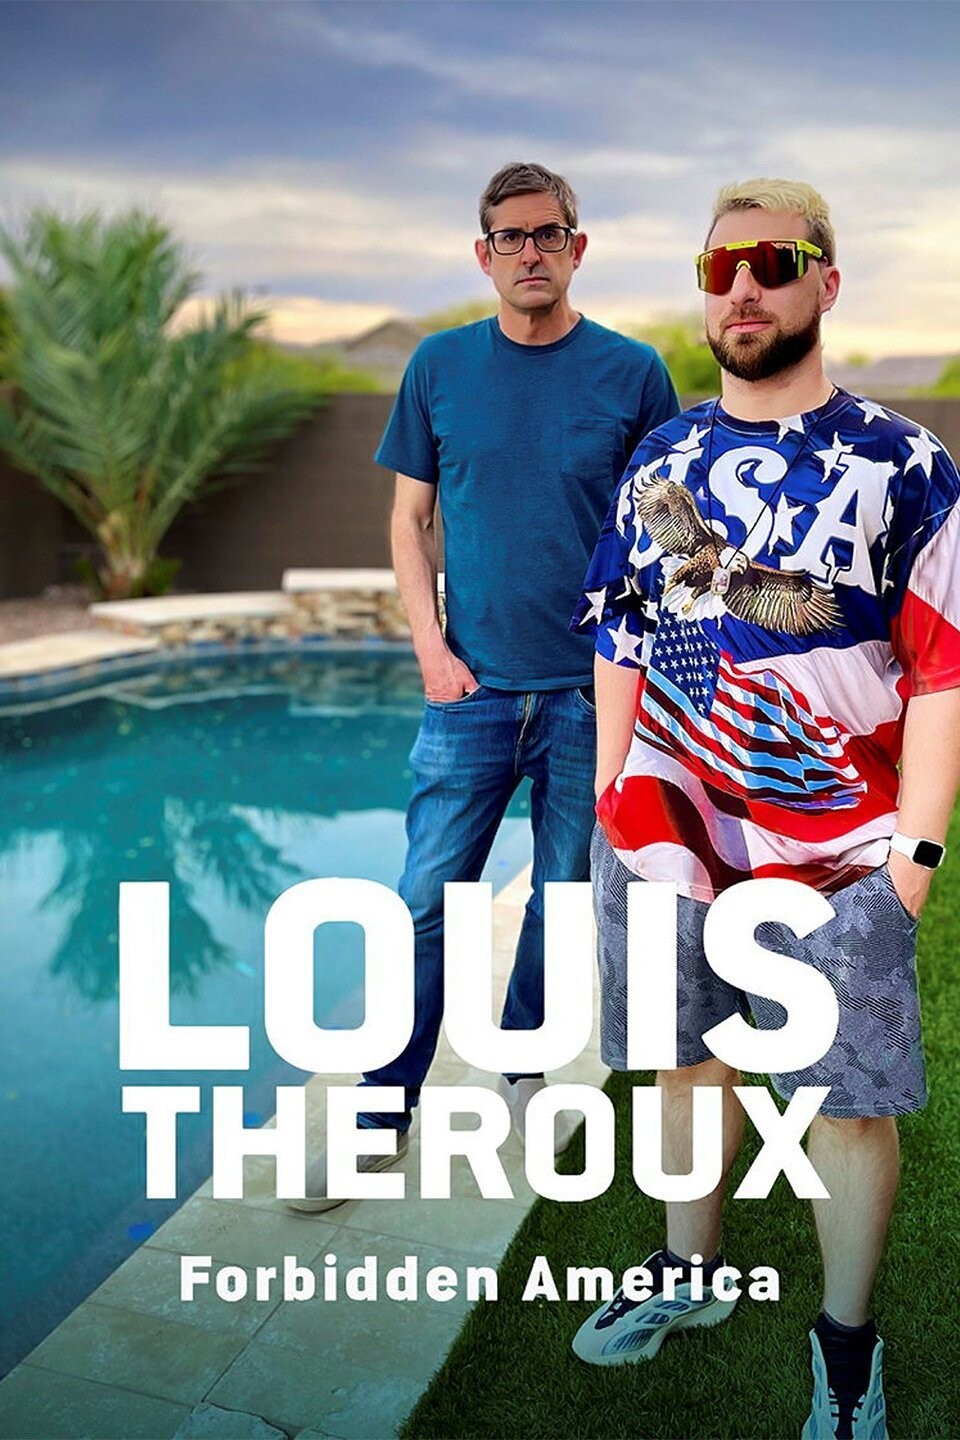 Watch Louis Theroux season 1 episode 4 streaming online